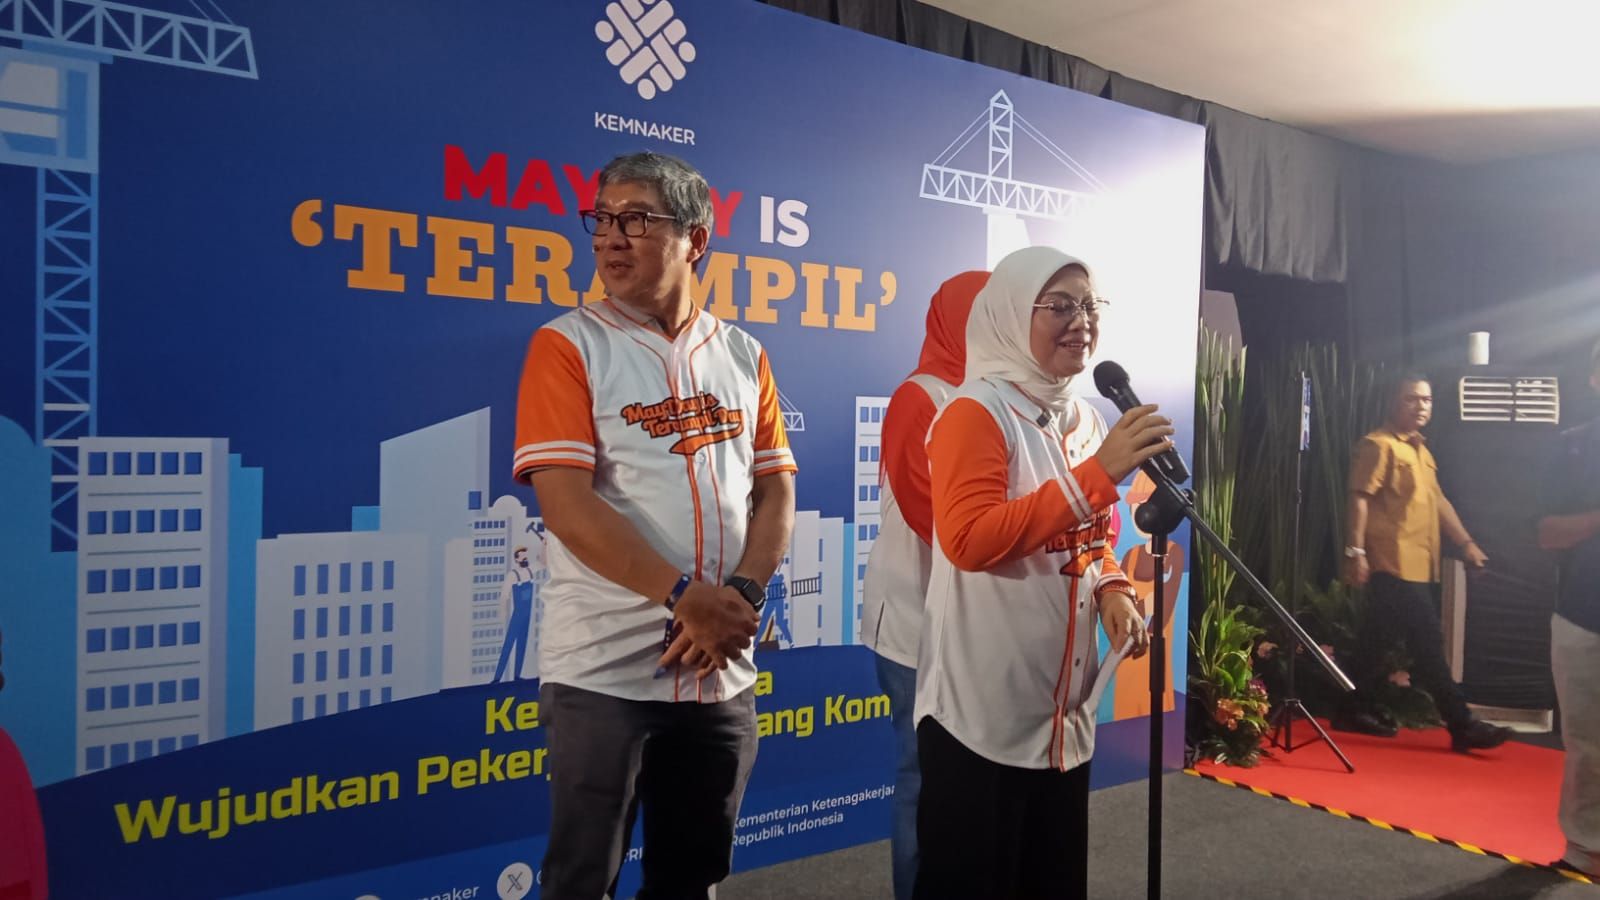 [POPULER MONEY] Serikat Pekerja Tuntut Naik Upah, Menaker Balik Tuntut Kenaikan Kompetensi | Luhut Janji Microsoft Tak Akan Menyesal Investasi Rp 27,6 Triliun di Indonesia